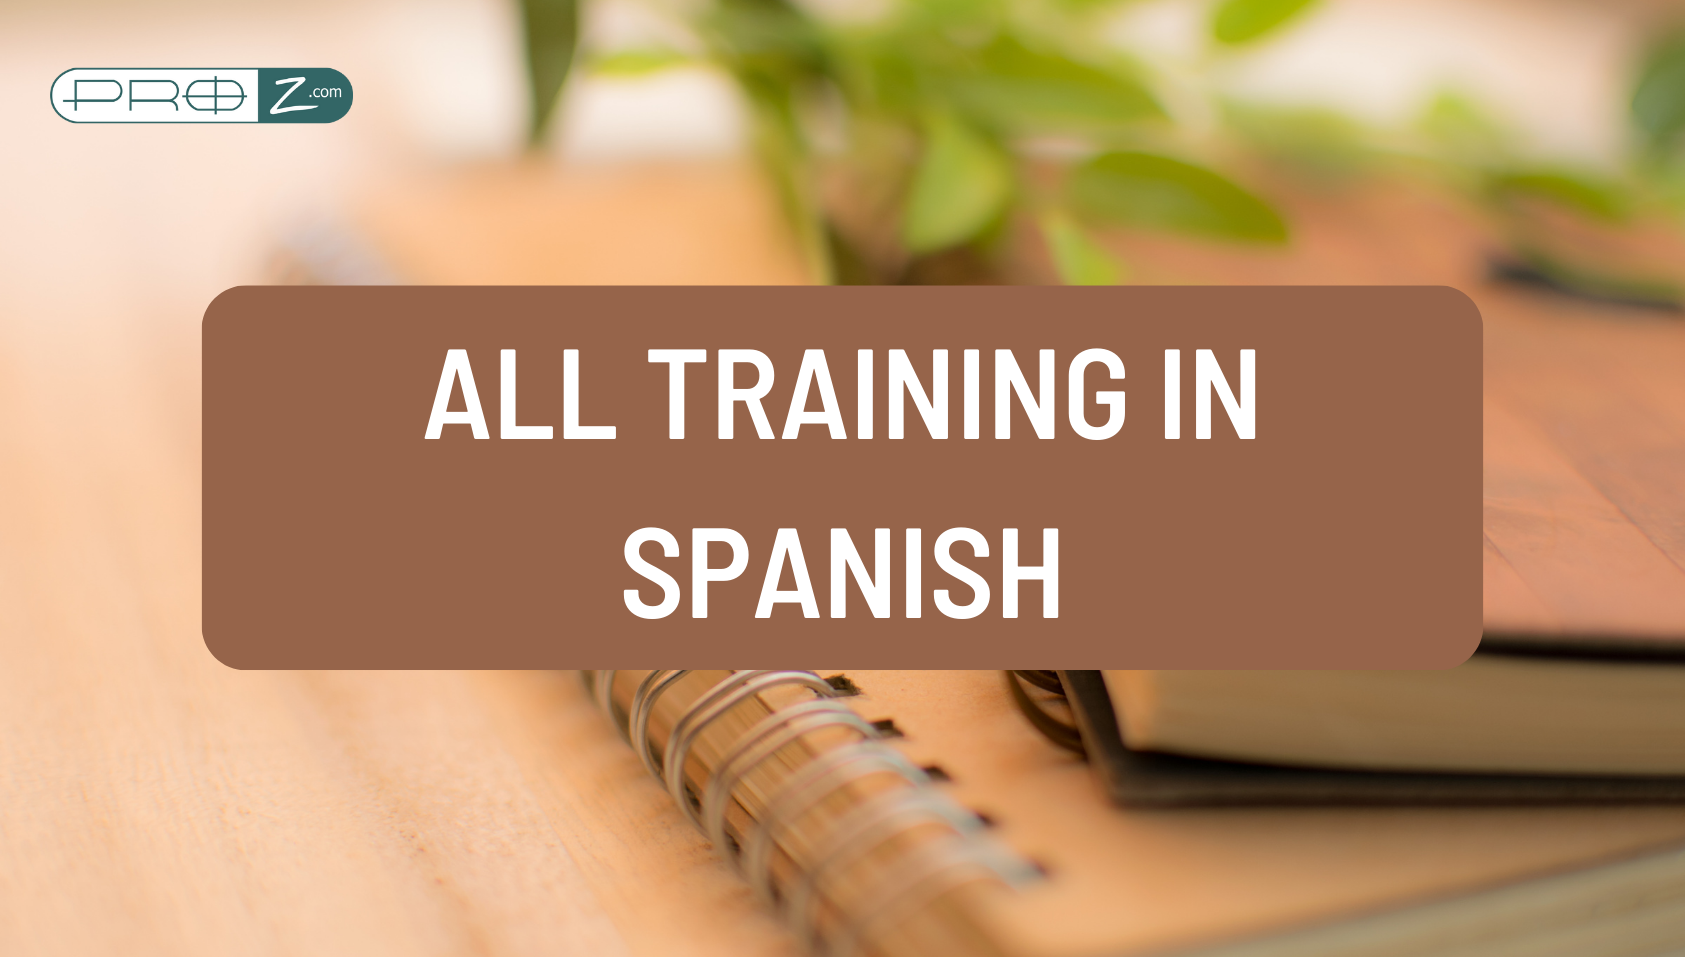 All training in spanish